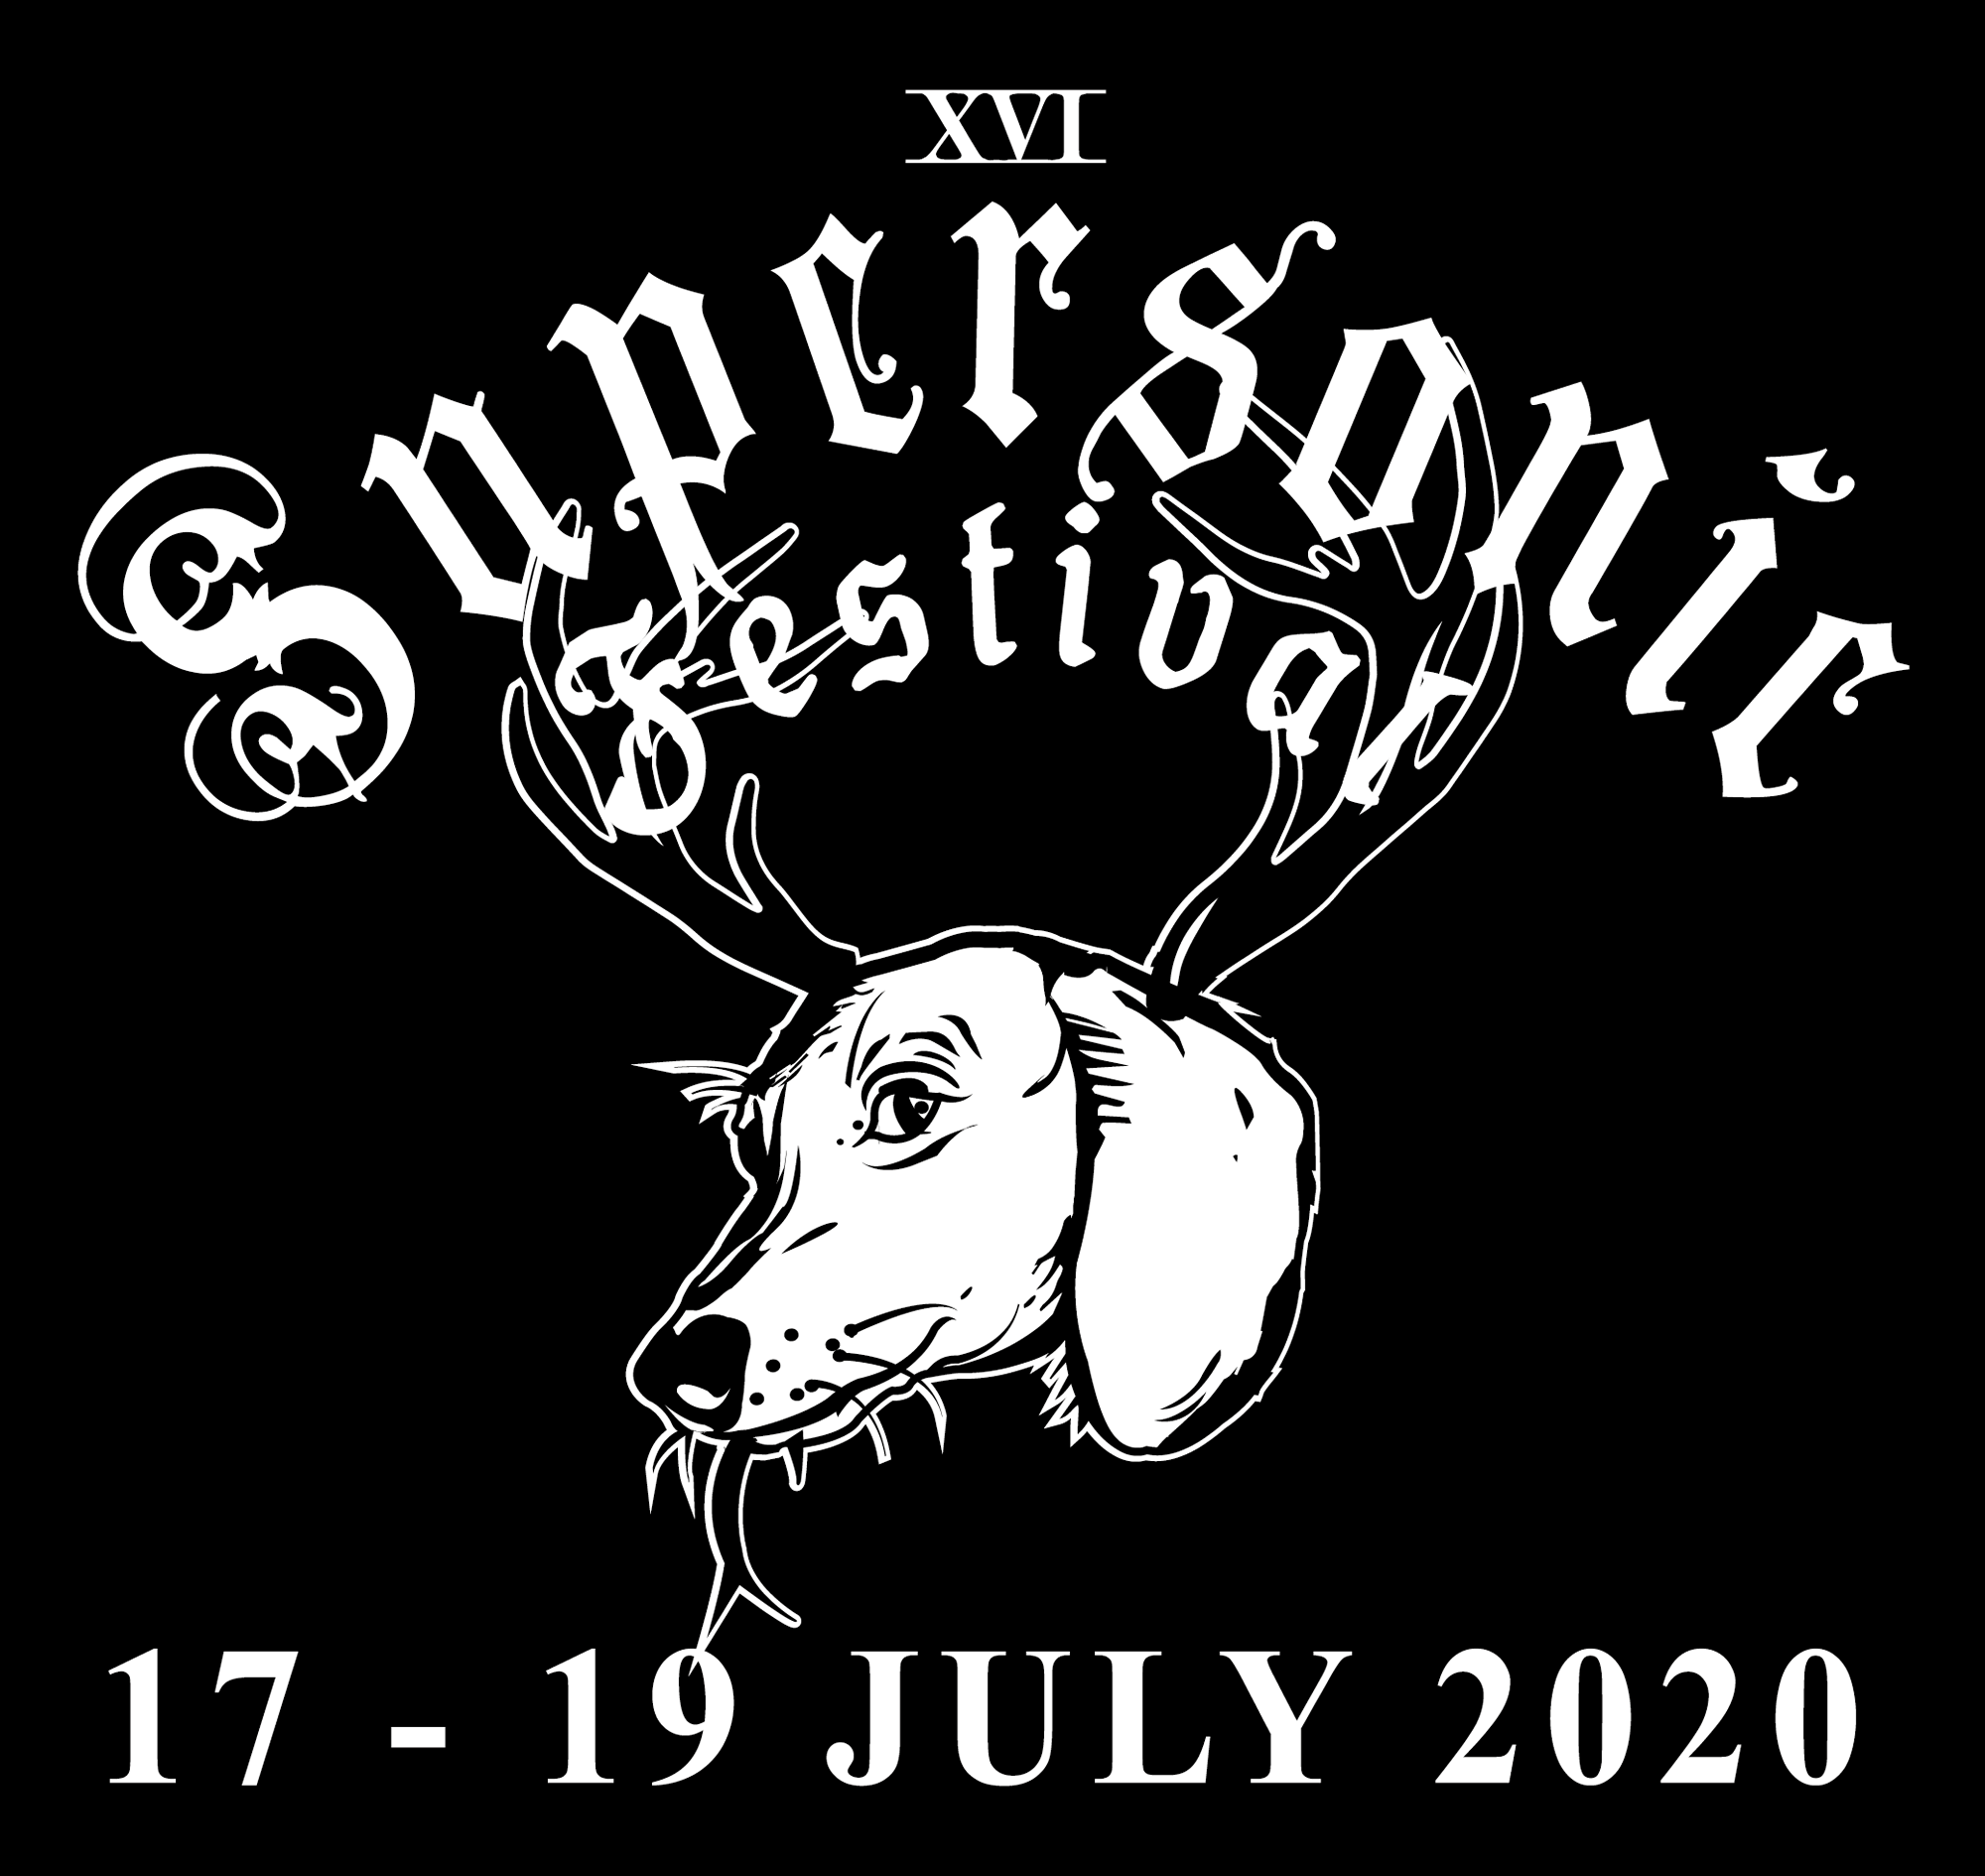 Supersonic Festival